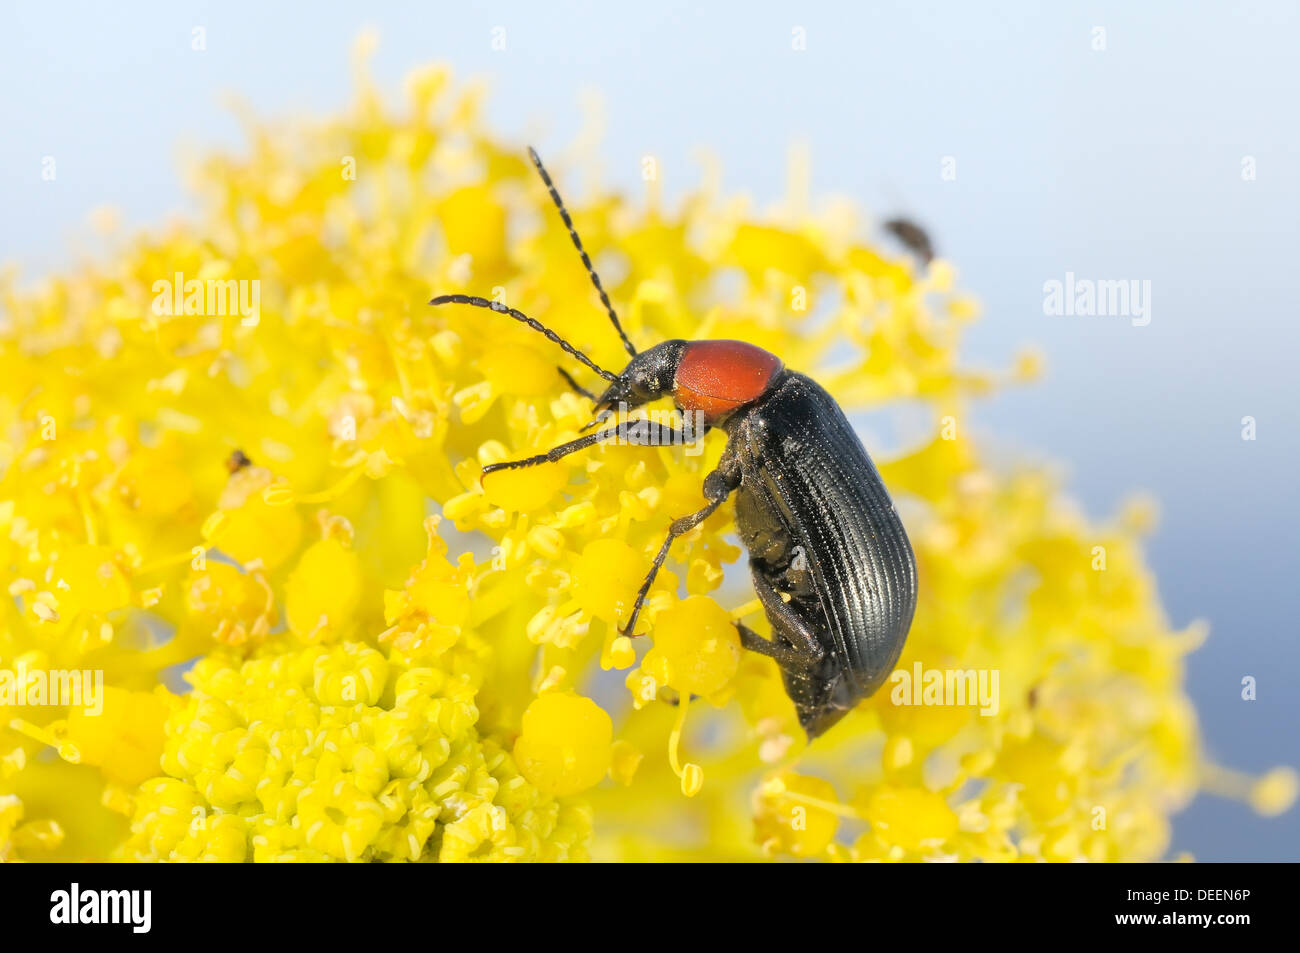 Comb-clawed beetle (Heliotaurus ruficollis) feeding on giant fennel flowers (Ferula communis), Lagos, Algarve, Portugal, Europe Stock Photo